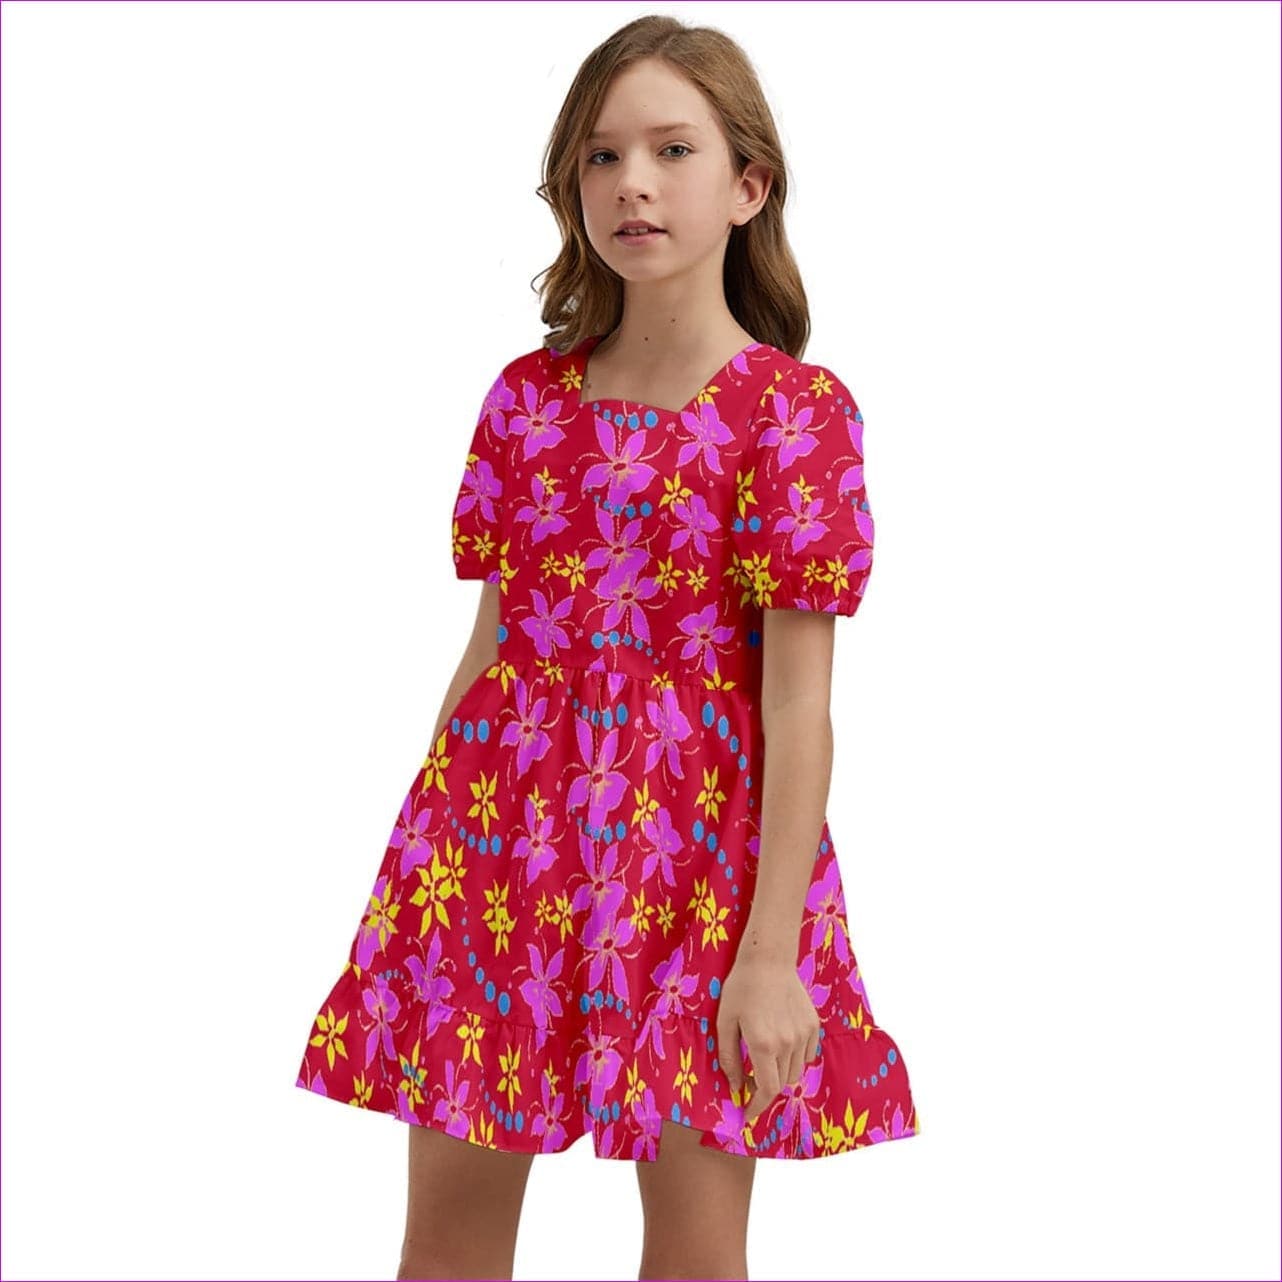 Floral Wear Kids Short Sleeve Dolly Dress - kid's playwear-dresses at TFC&H Co.